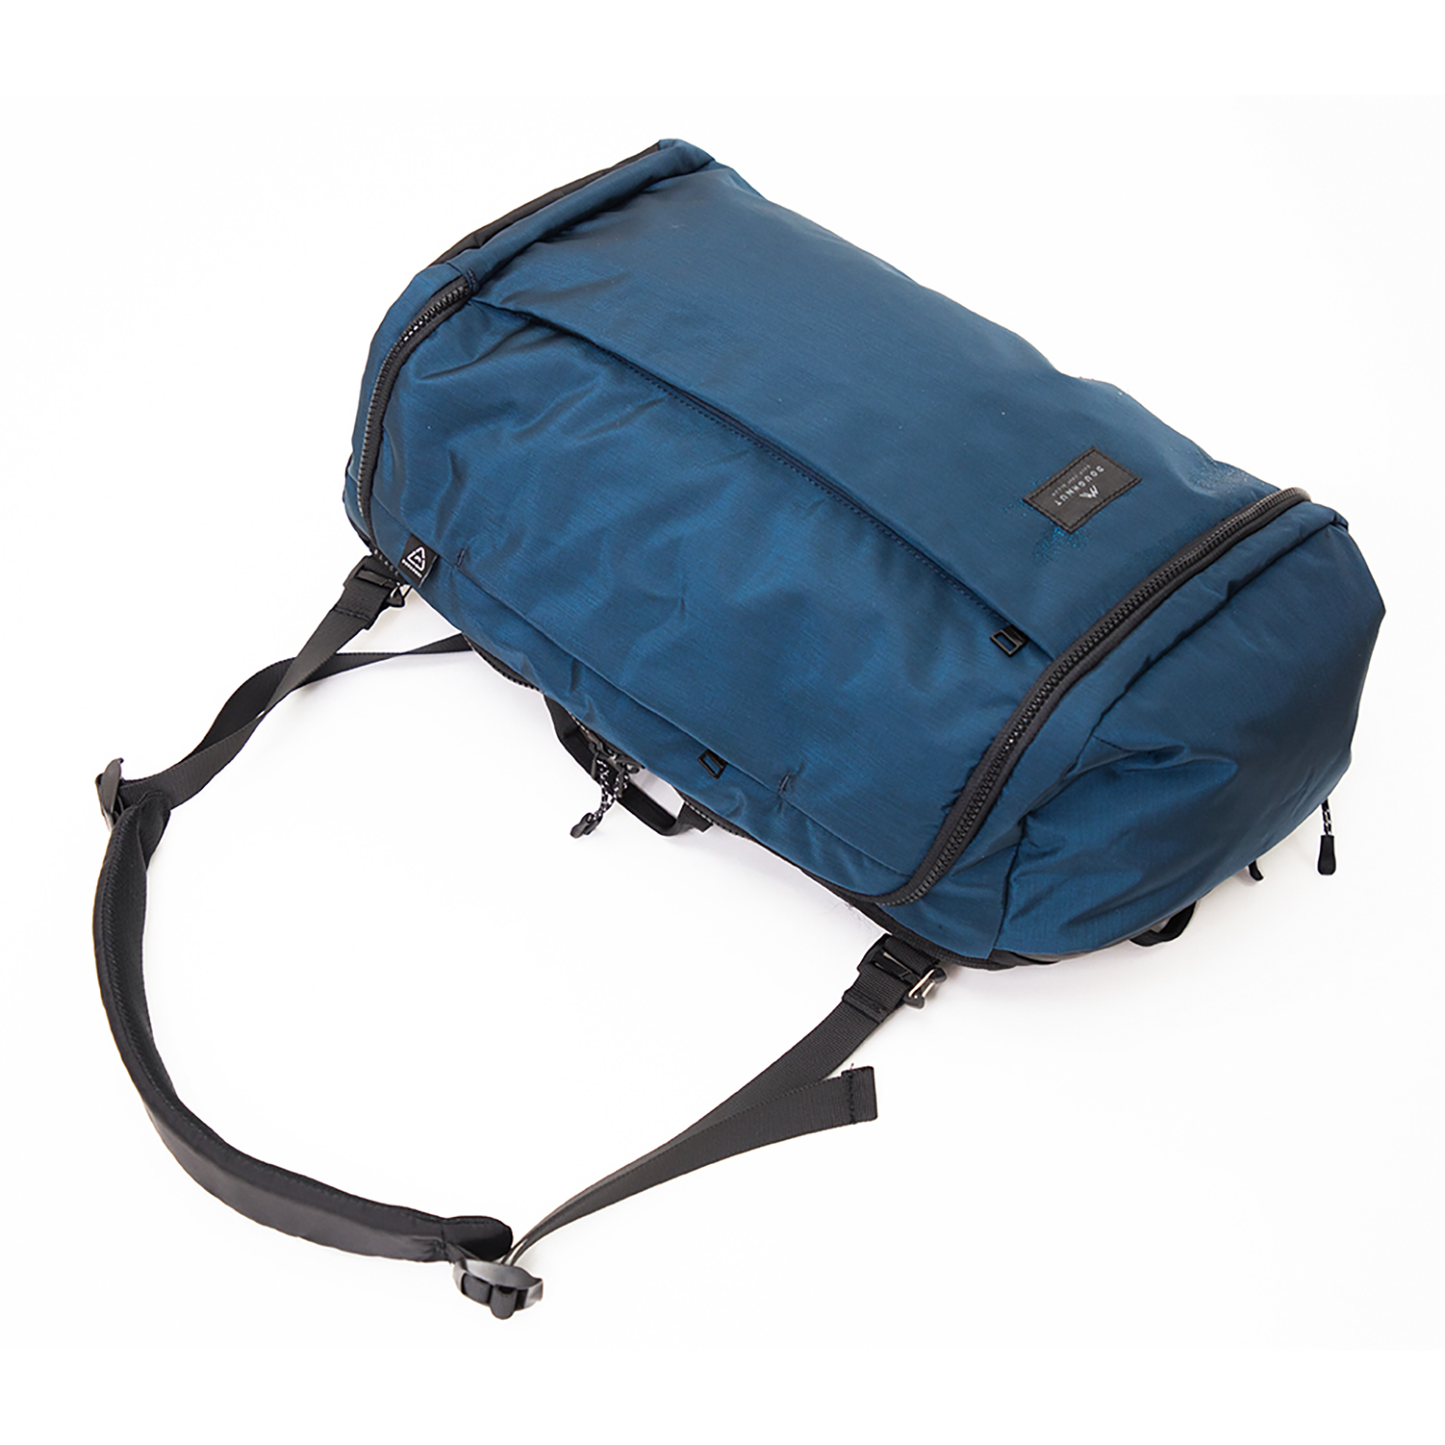 Sturdy Ocean Power Series Pacific Blue Backpack